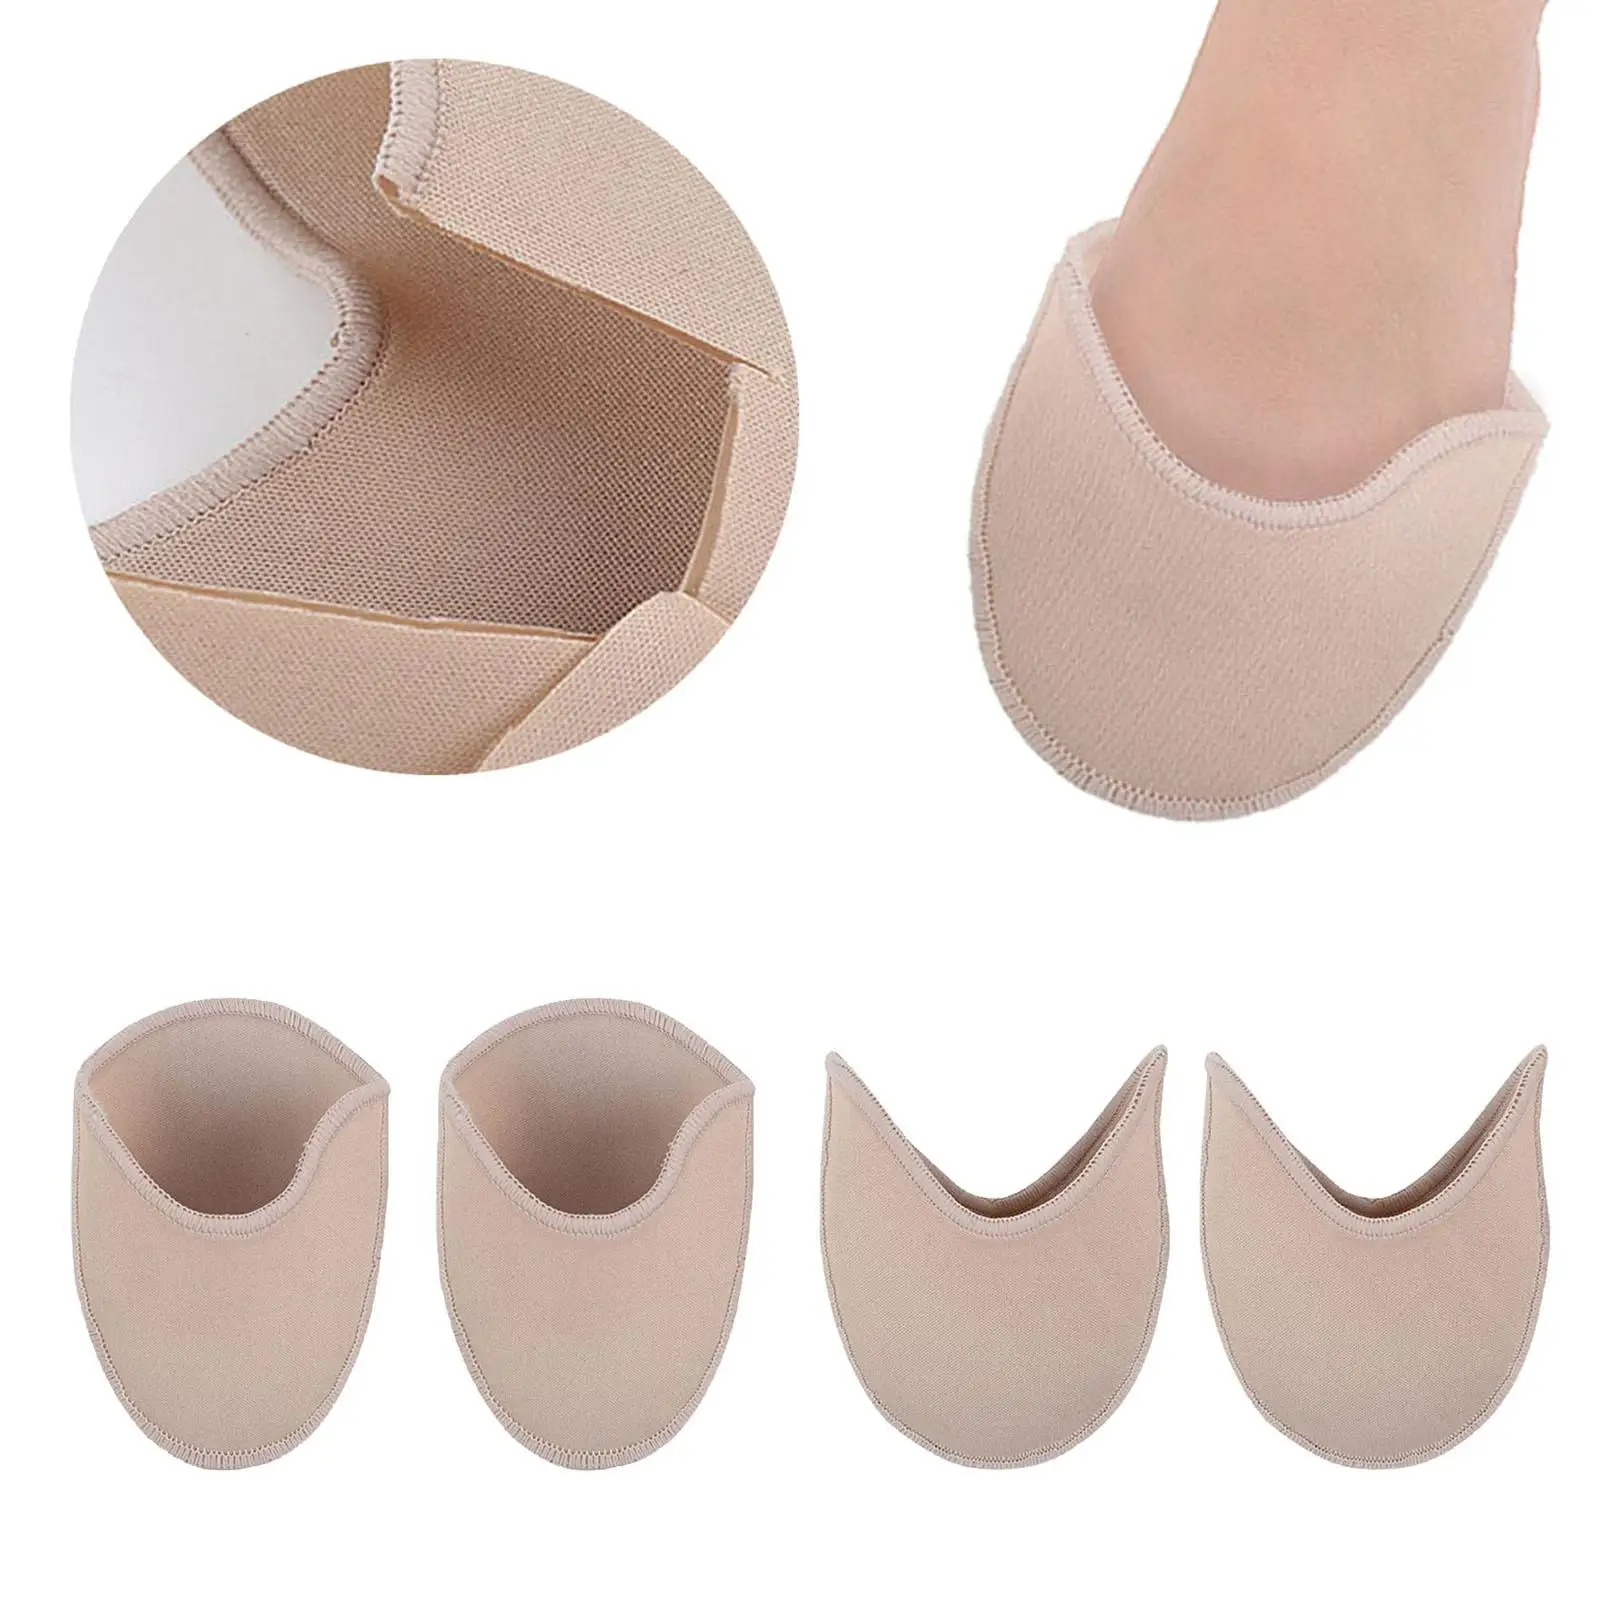 2Pieces Ballet Dance Pointe Shoe Socks Pads Soft for Ballet Dancer Cushion